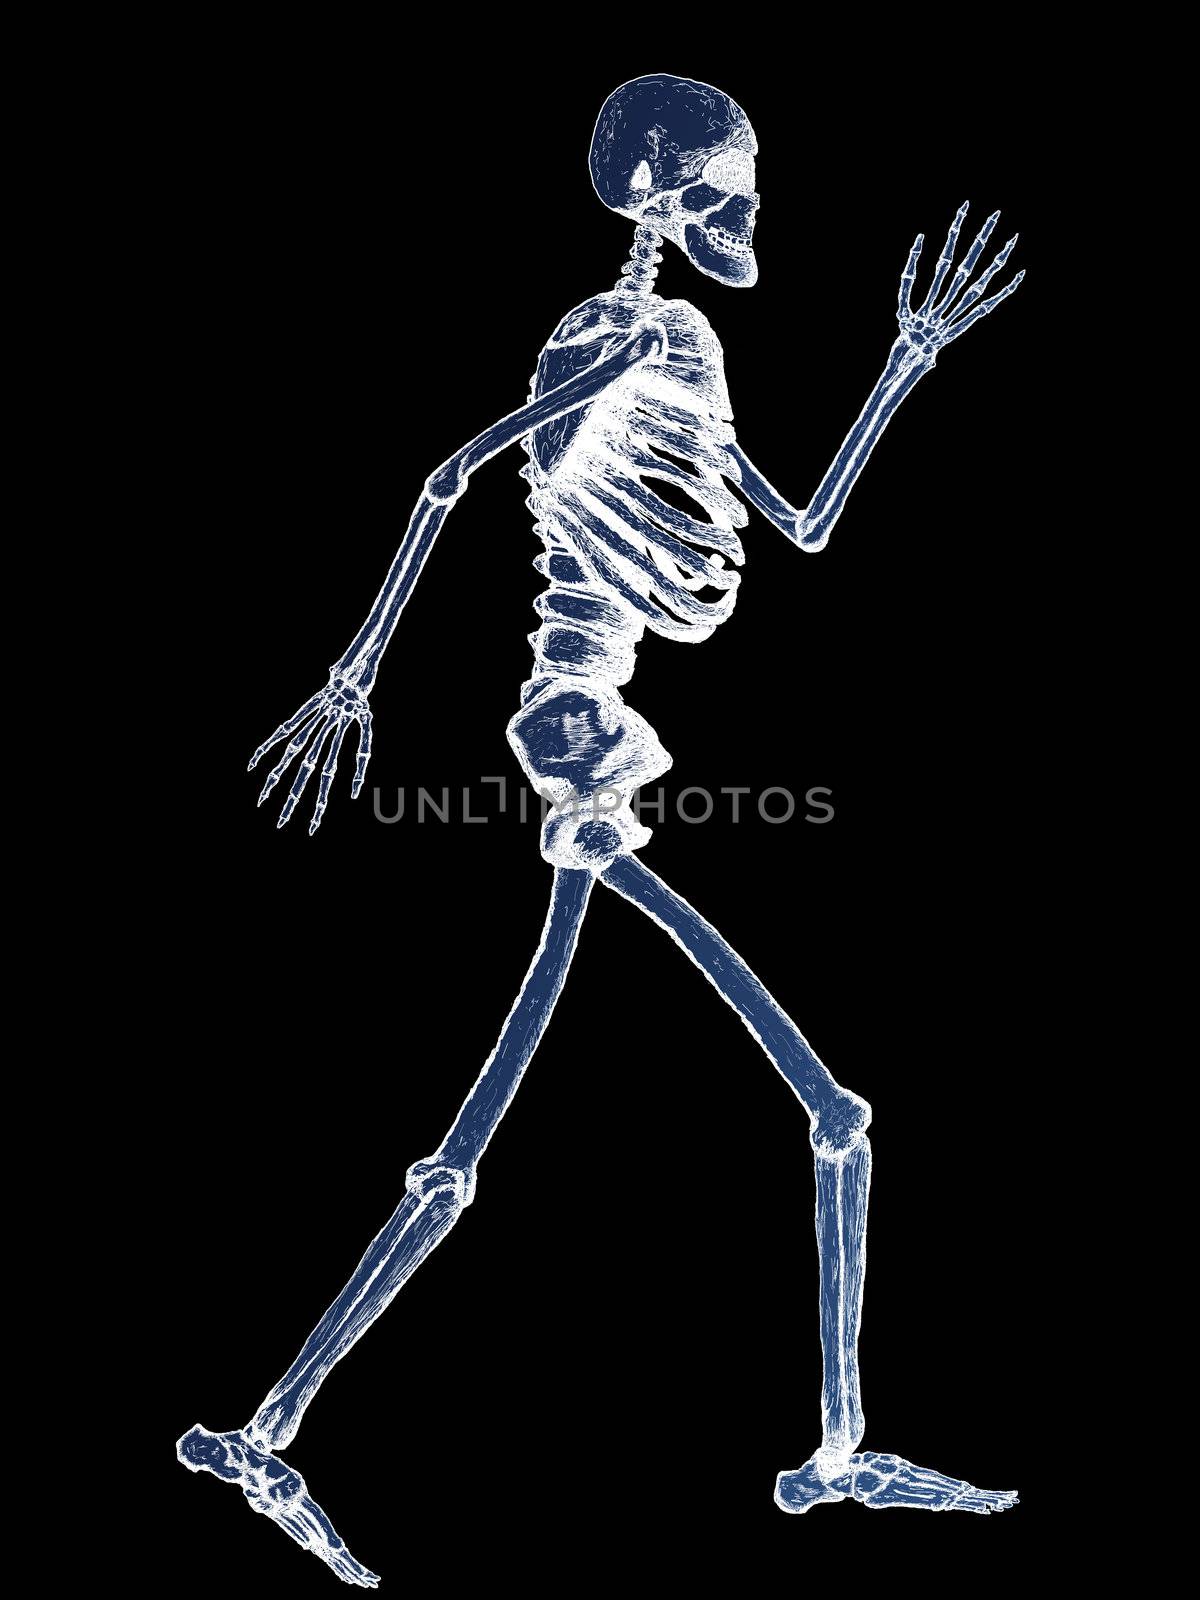 X-Ray of Full Human Skeleton Illustration on Black Background by bobbigmac